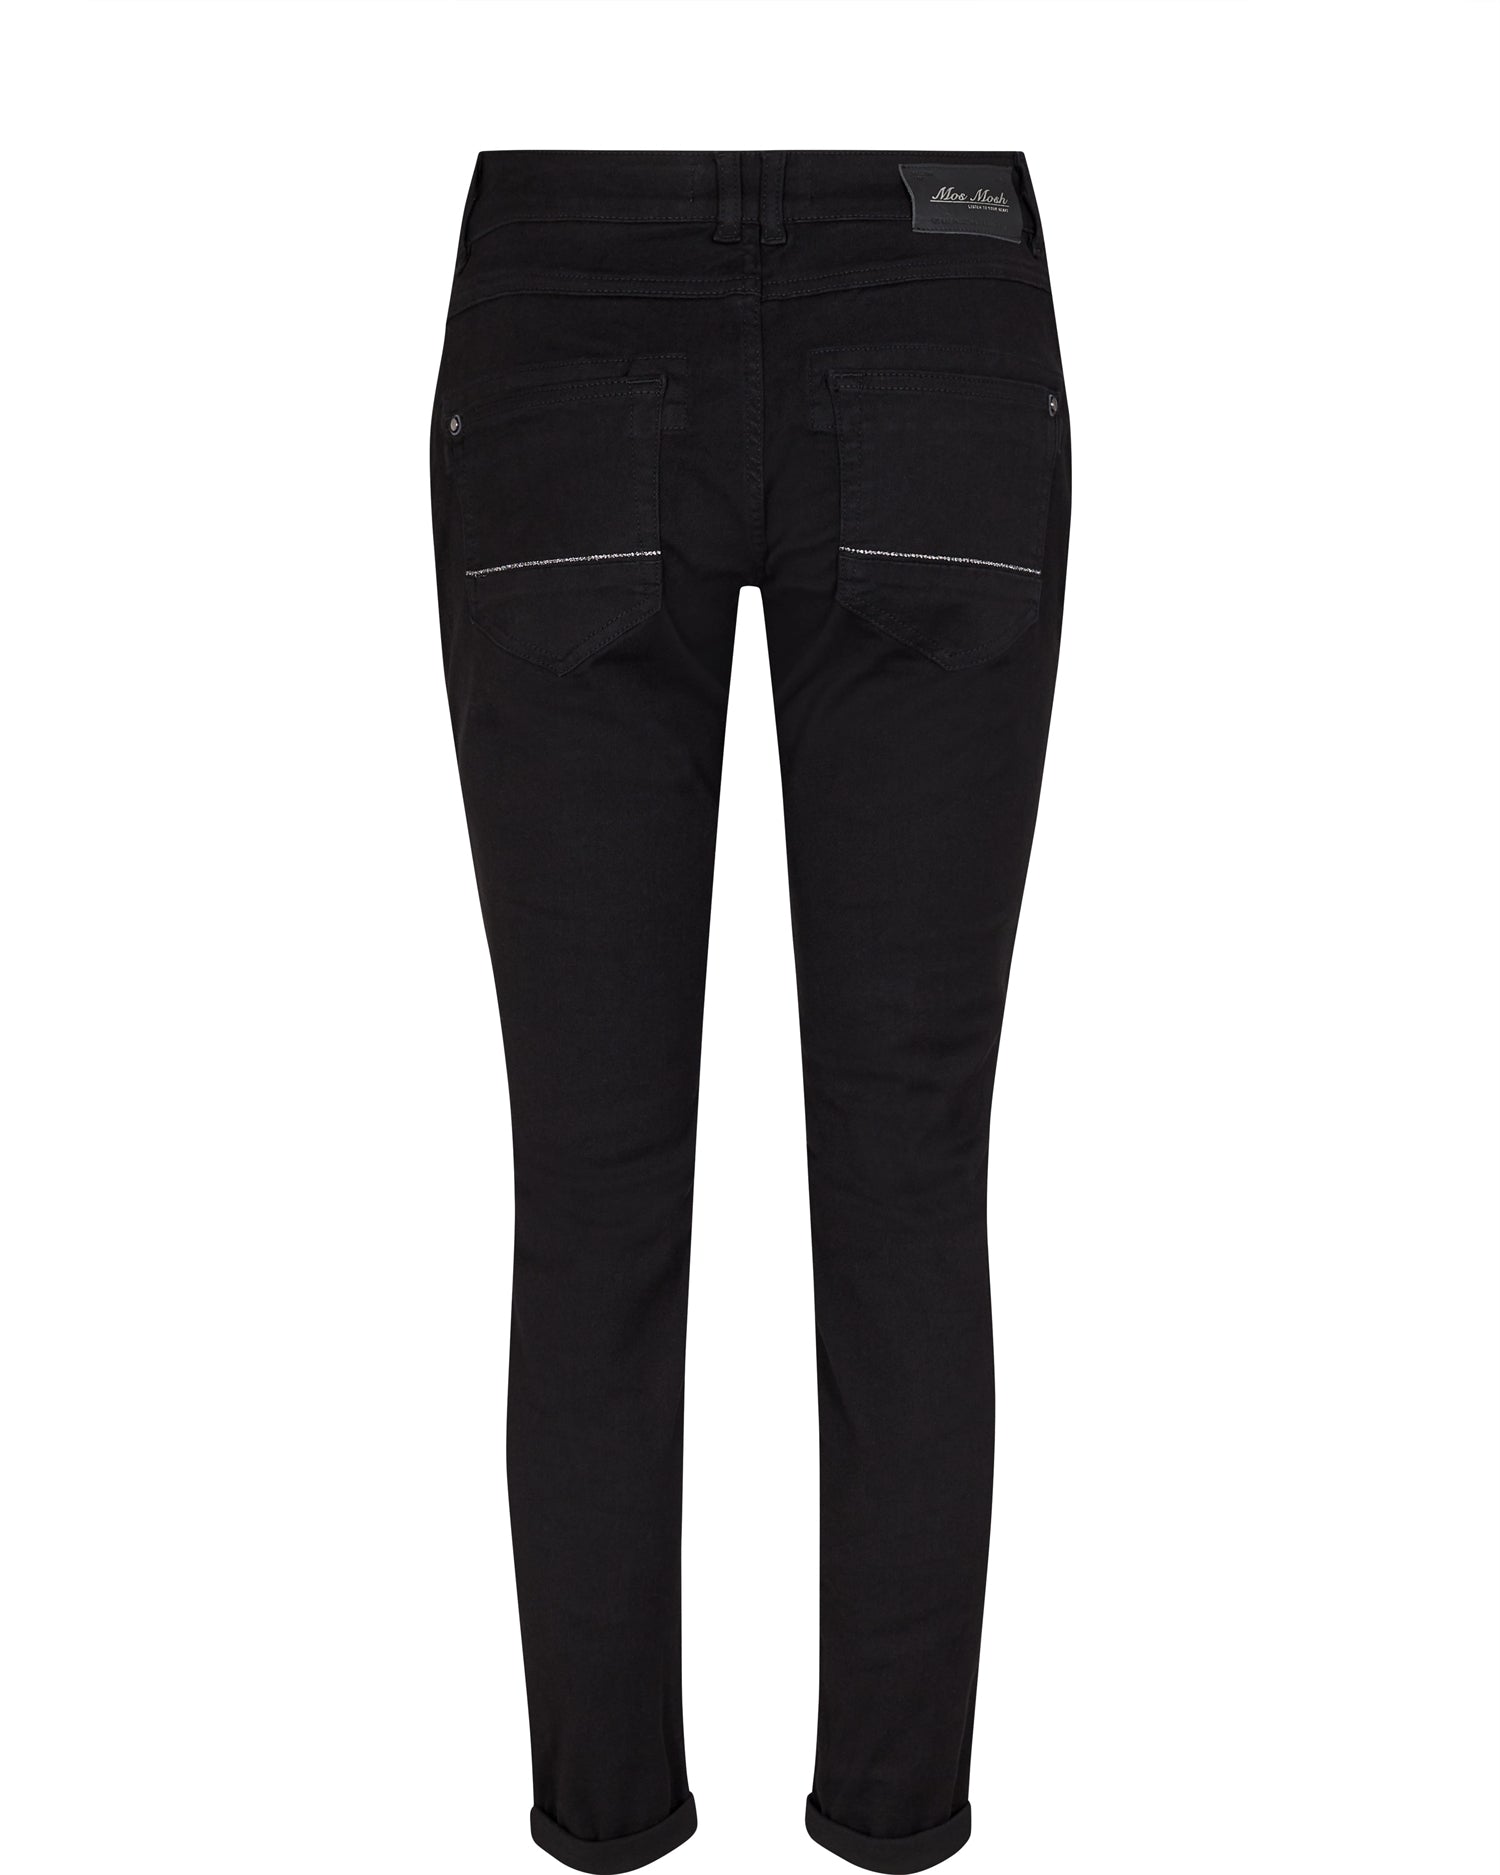 Naomi Row Black Jeans